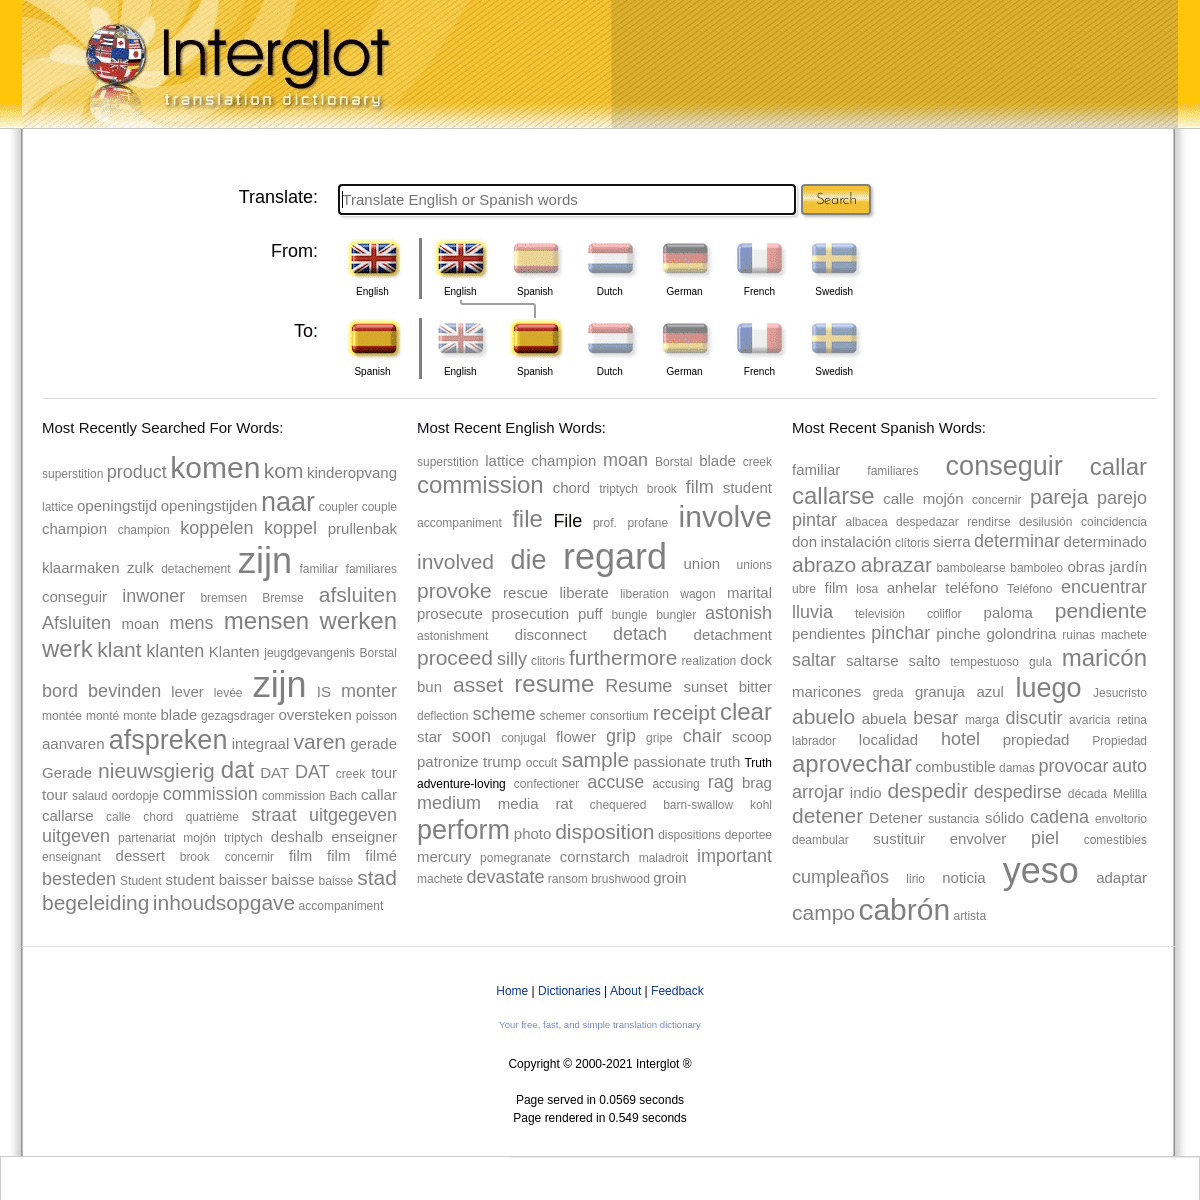 A complete backup of https://interglot.com